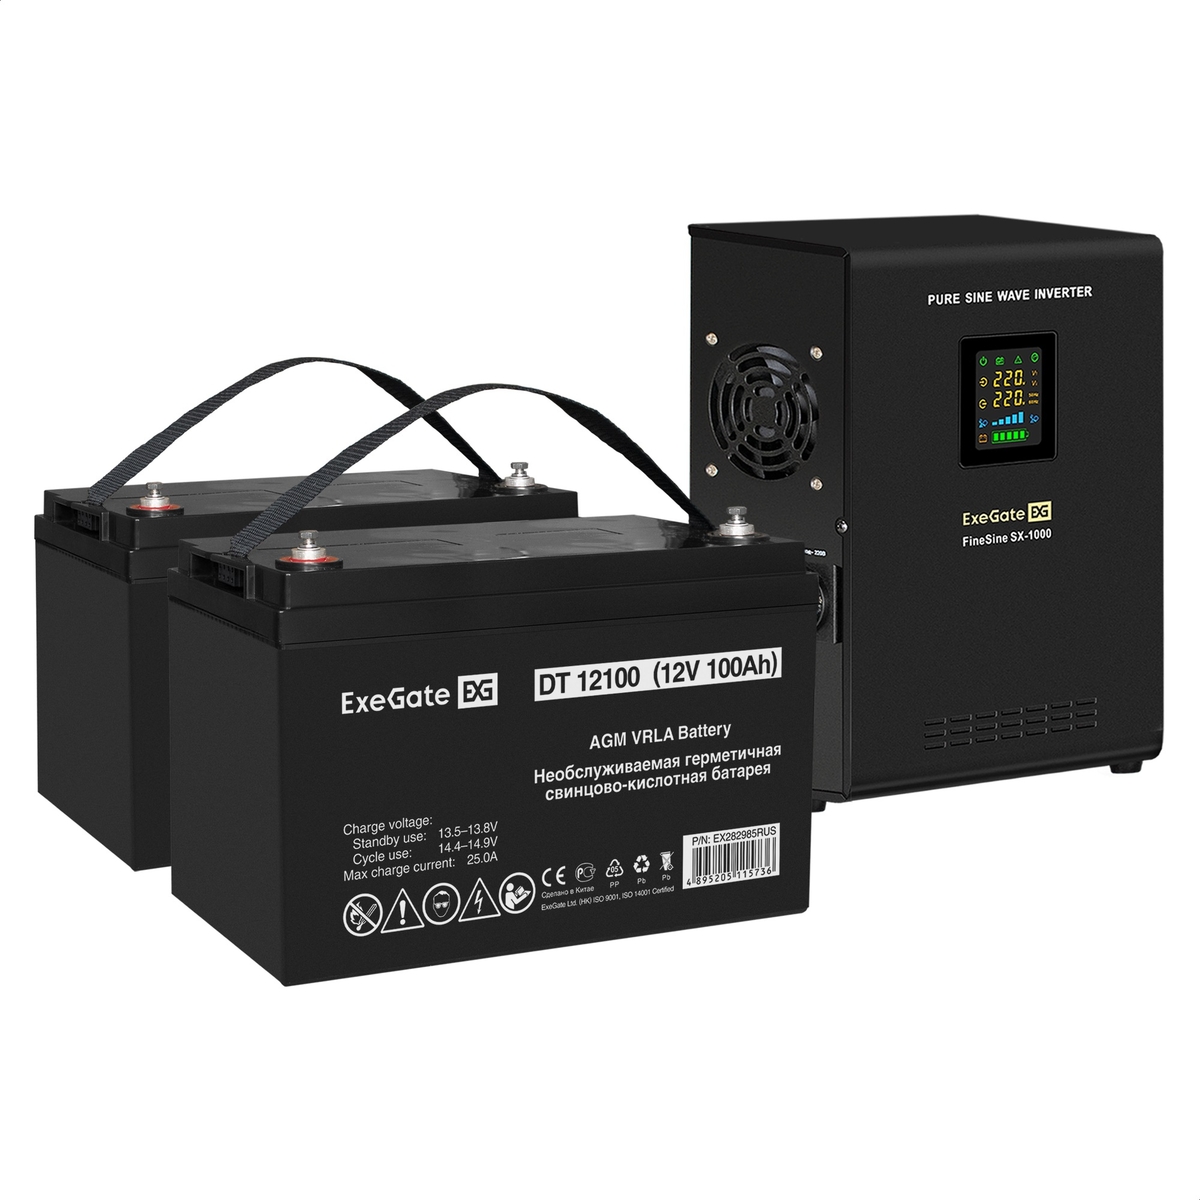 UPS set EX295997 + battery 100Ah EX282985 1 piece